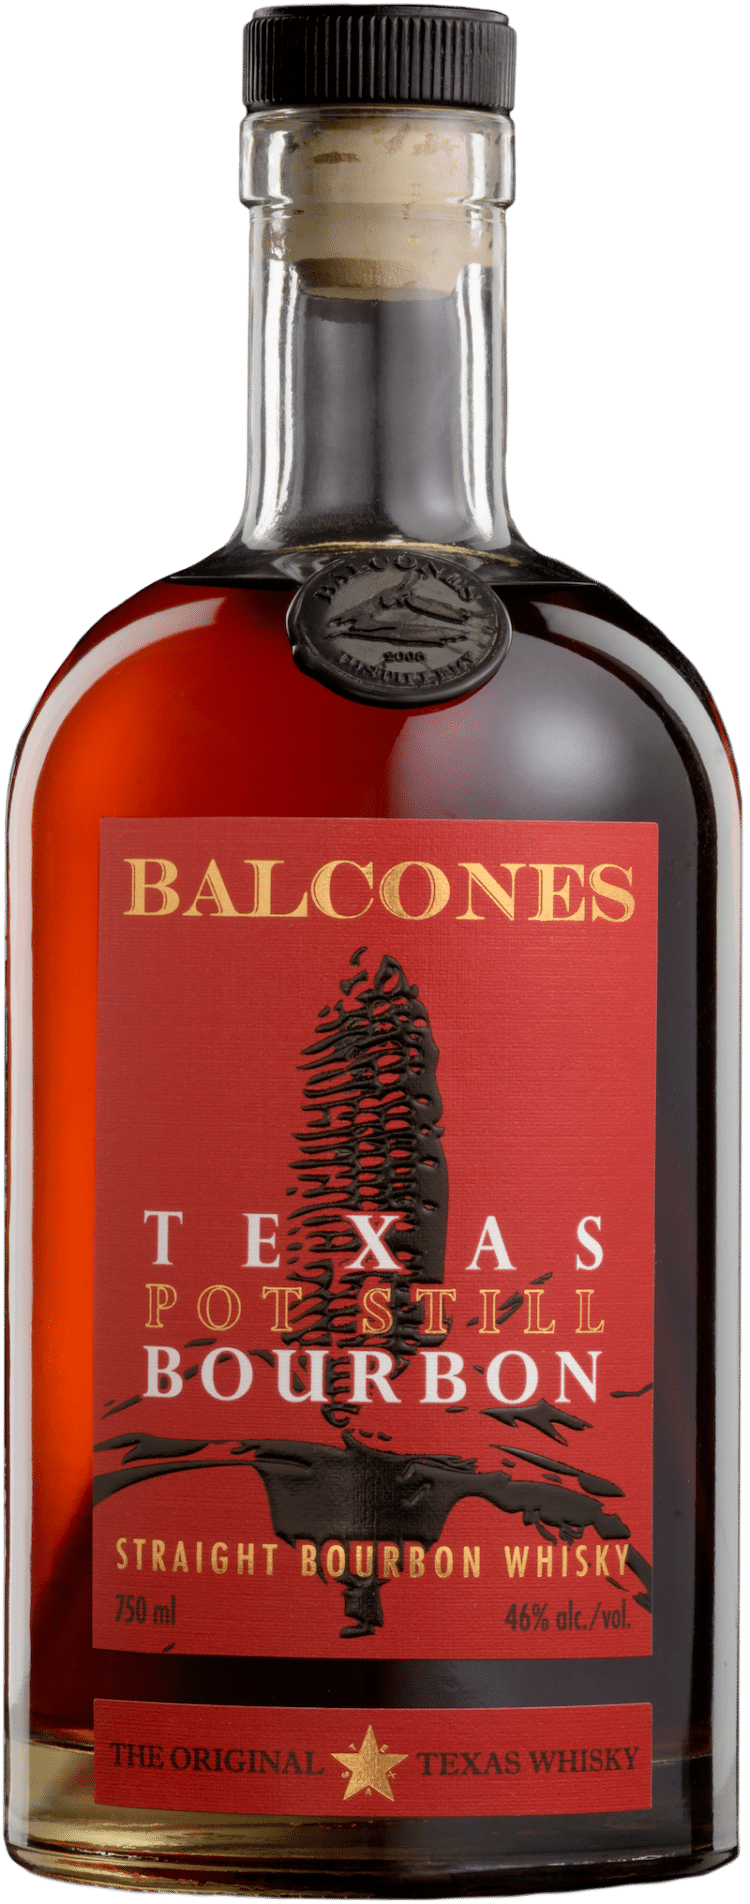 Bottle of Balcones Texas Pot Still Bourbon